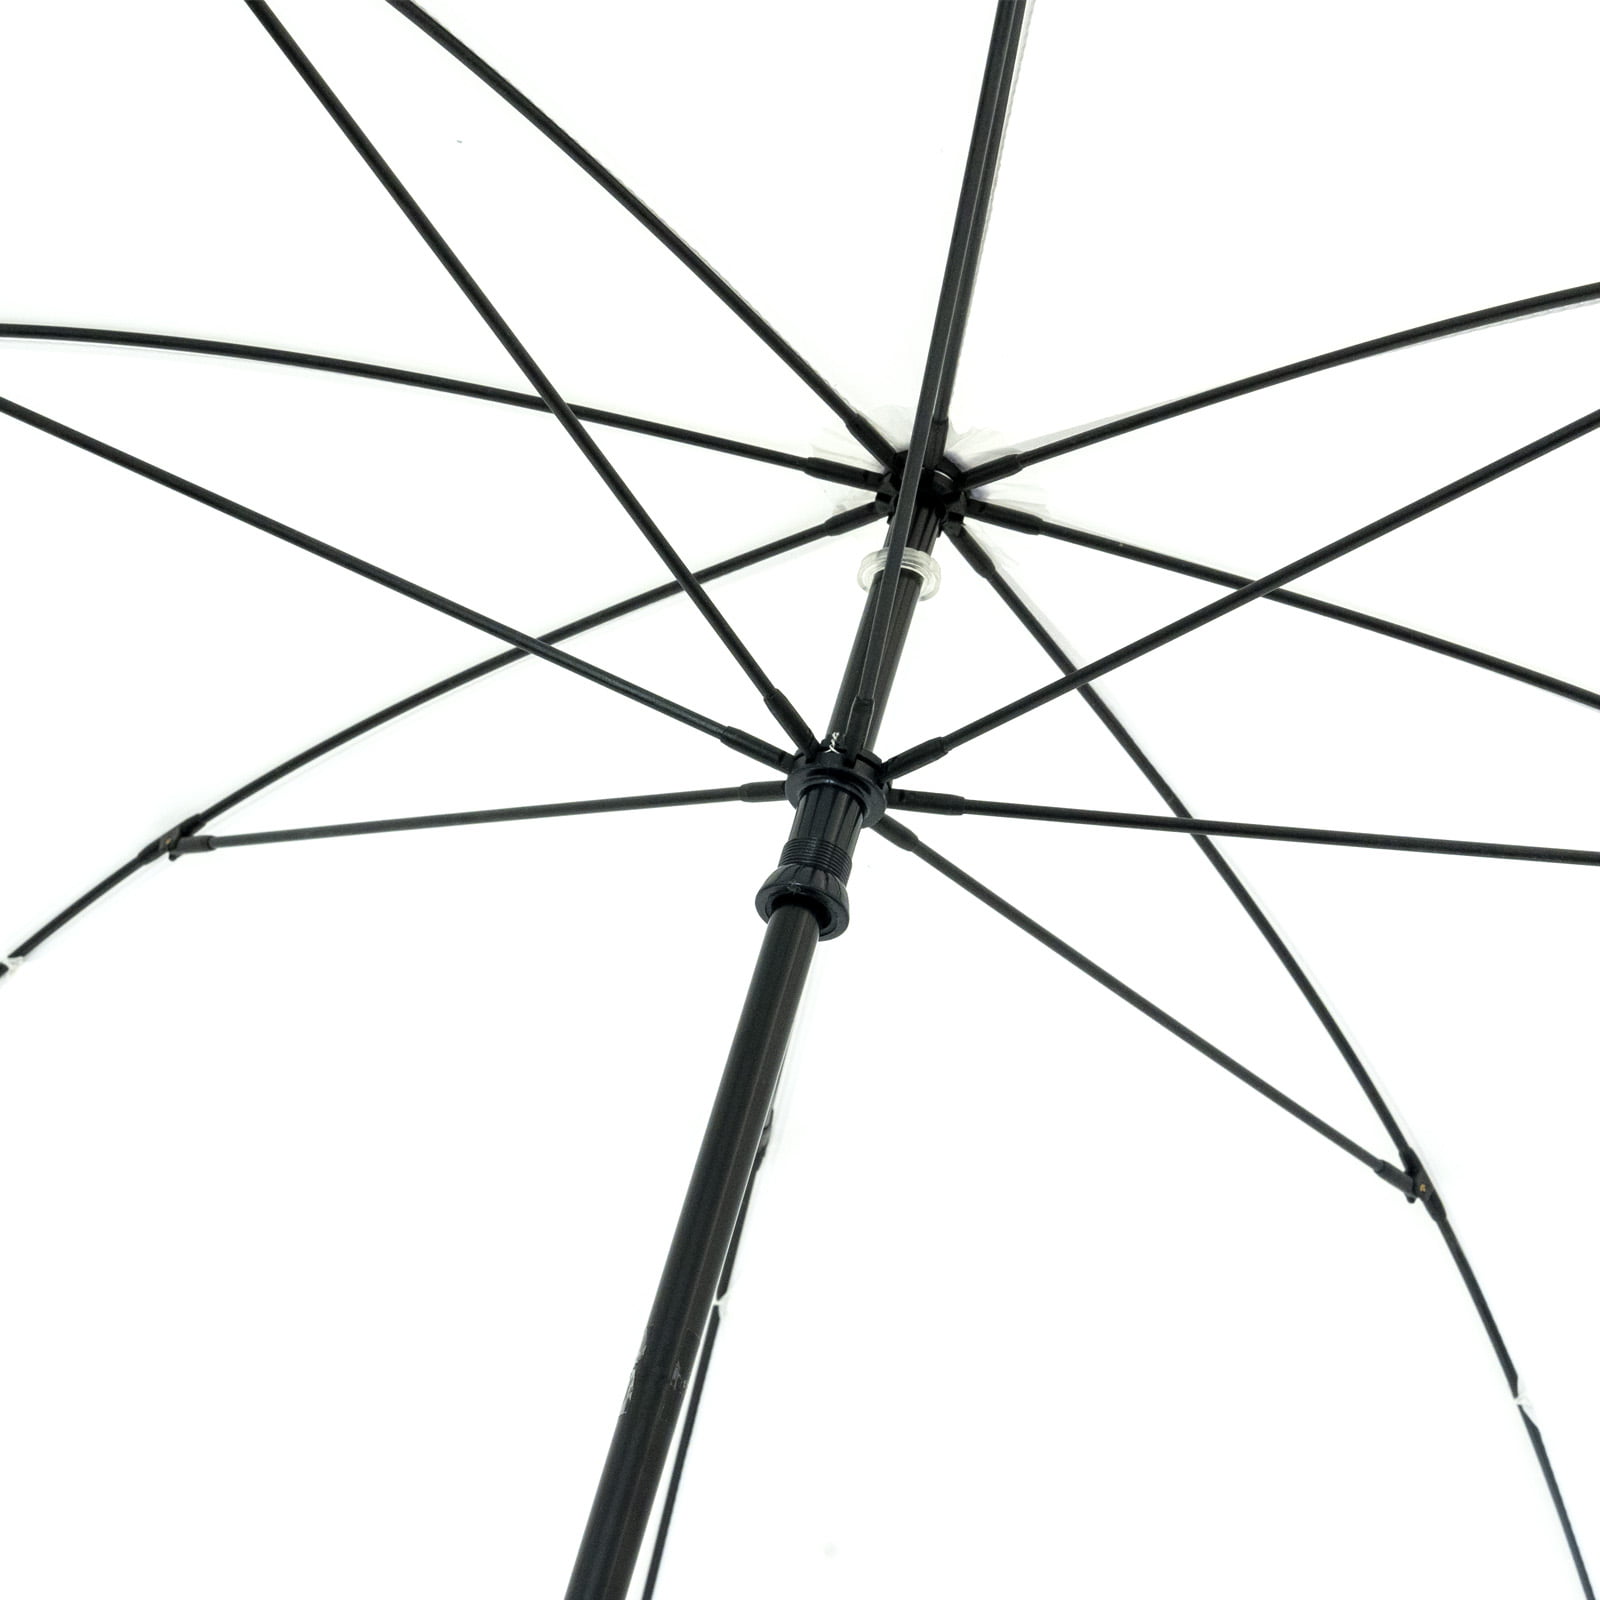 White Budget Golf Size Wedding Umbrella frame and underside